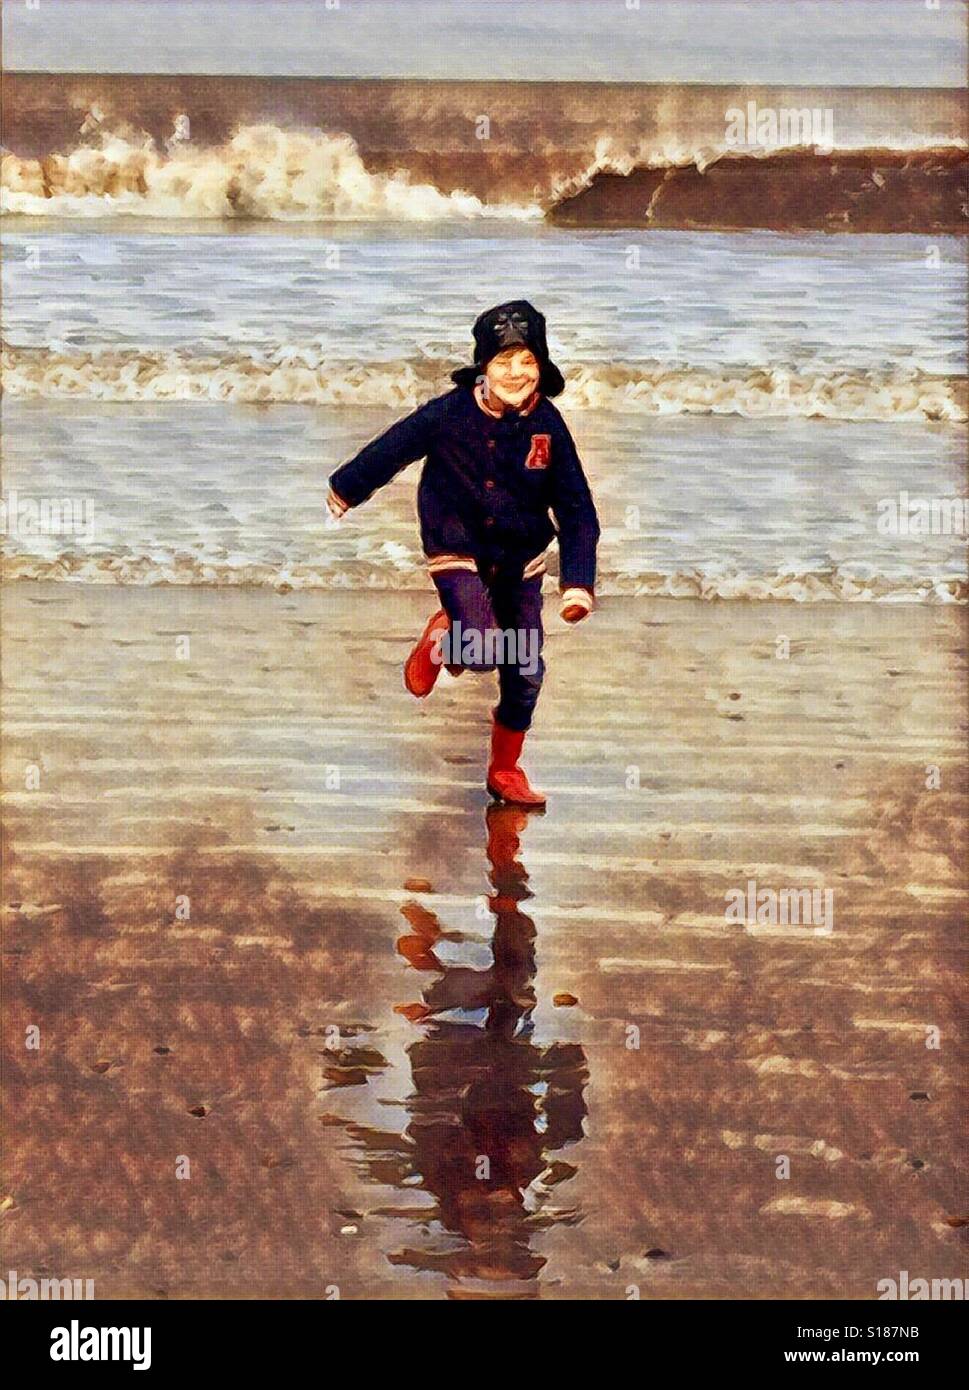 Boy running on a beach in winter Stock Photo